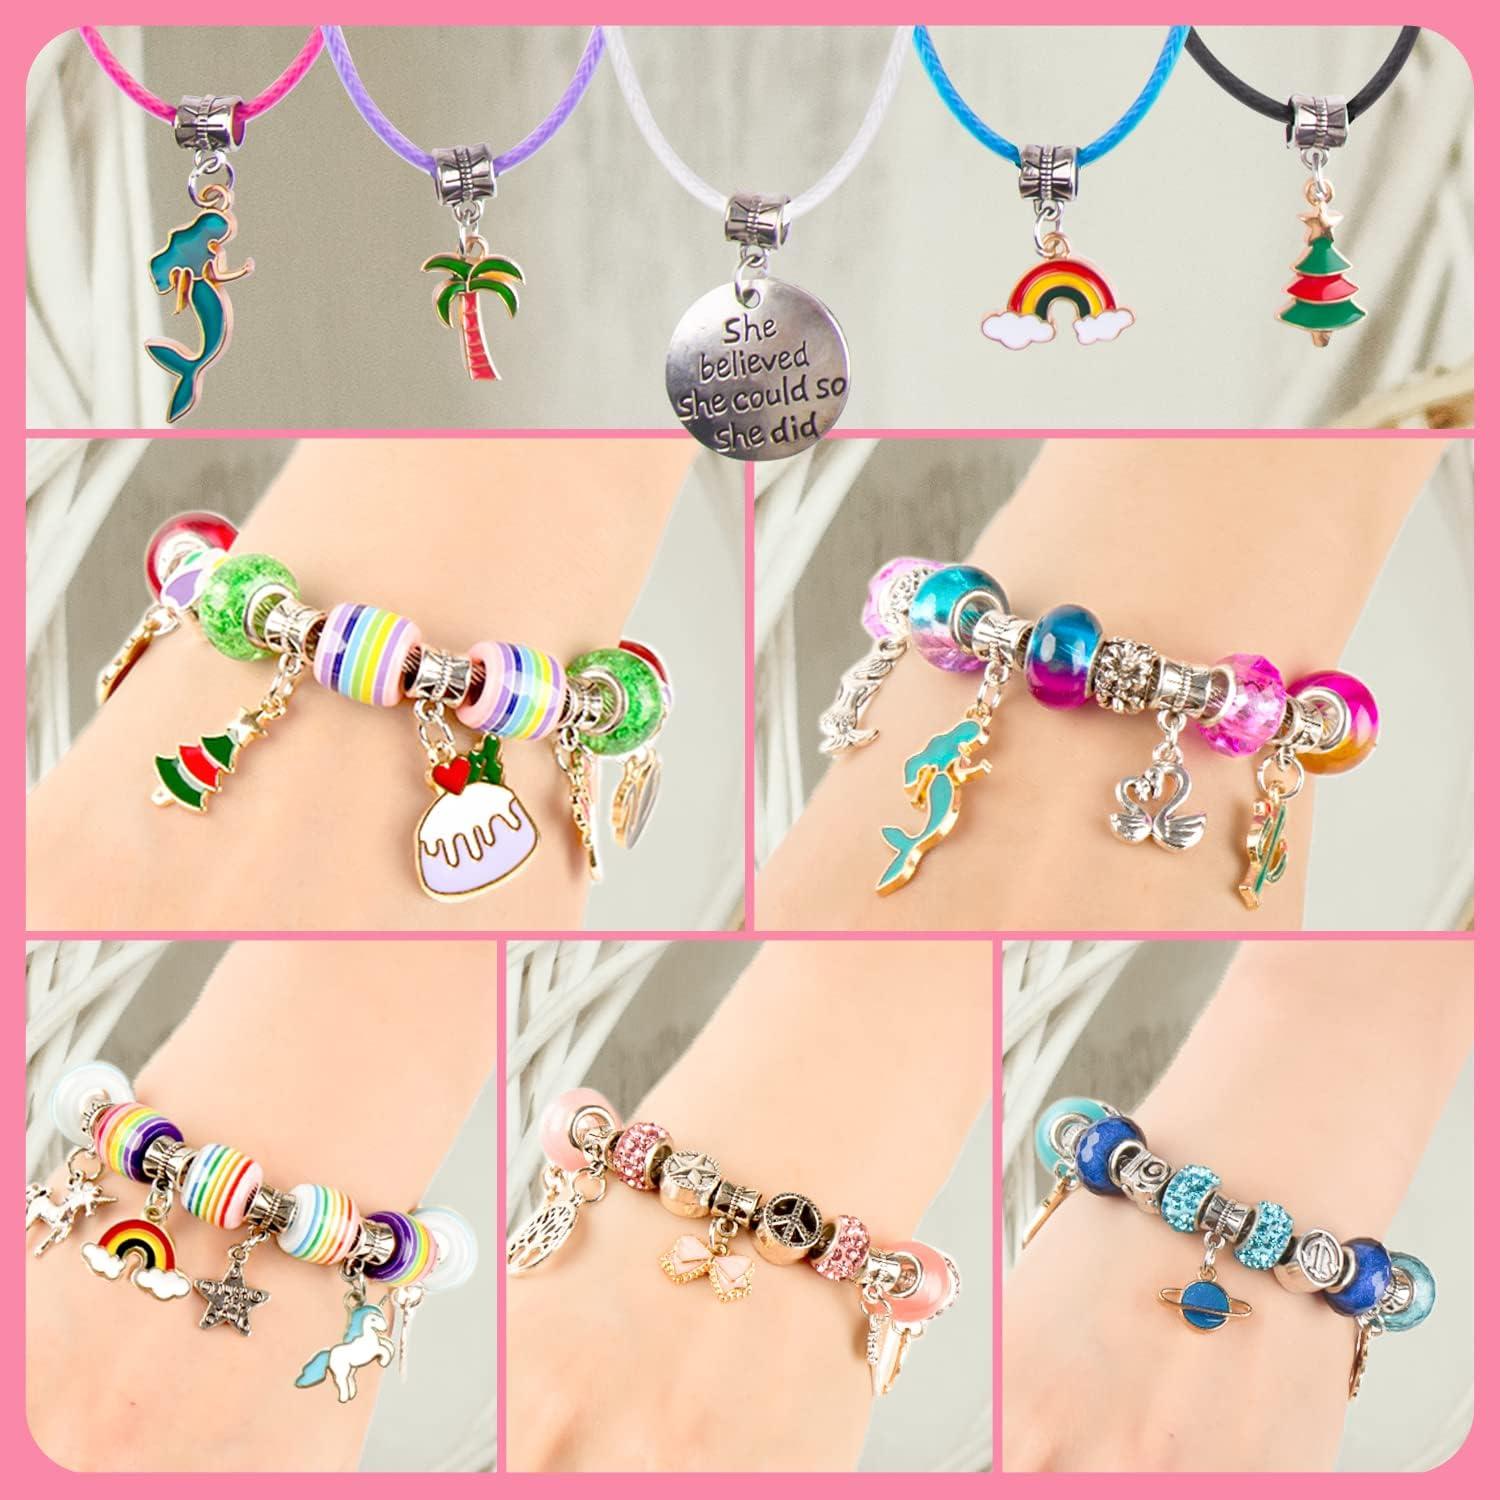 SUNNYCLUE 1 Set 450+ pcs Beaded Charm Bracelet Making Kit DIY Jewelry Arts  and Crafts Kits for Kids Girls Adults Children Friendship Bracelets- Make 8  Charm Bracelet 